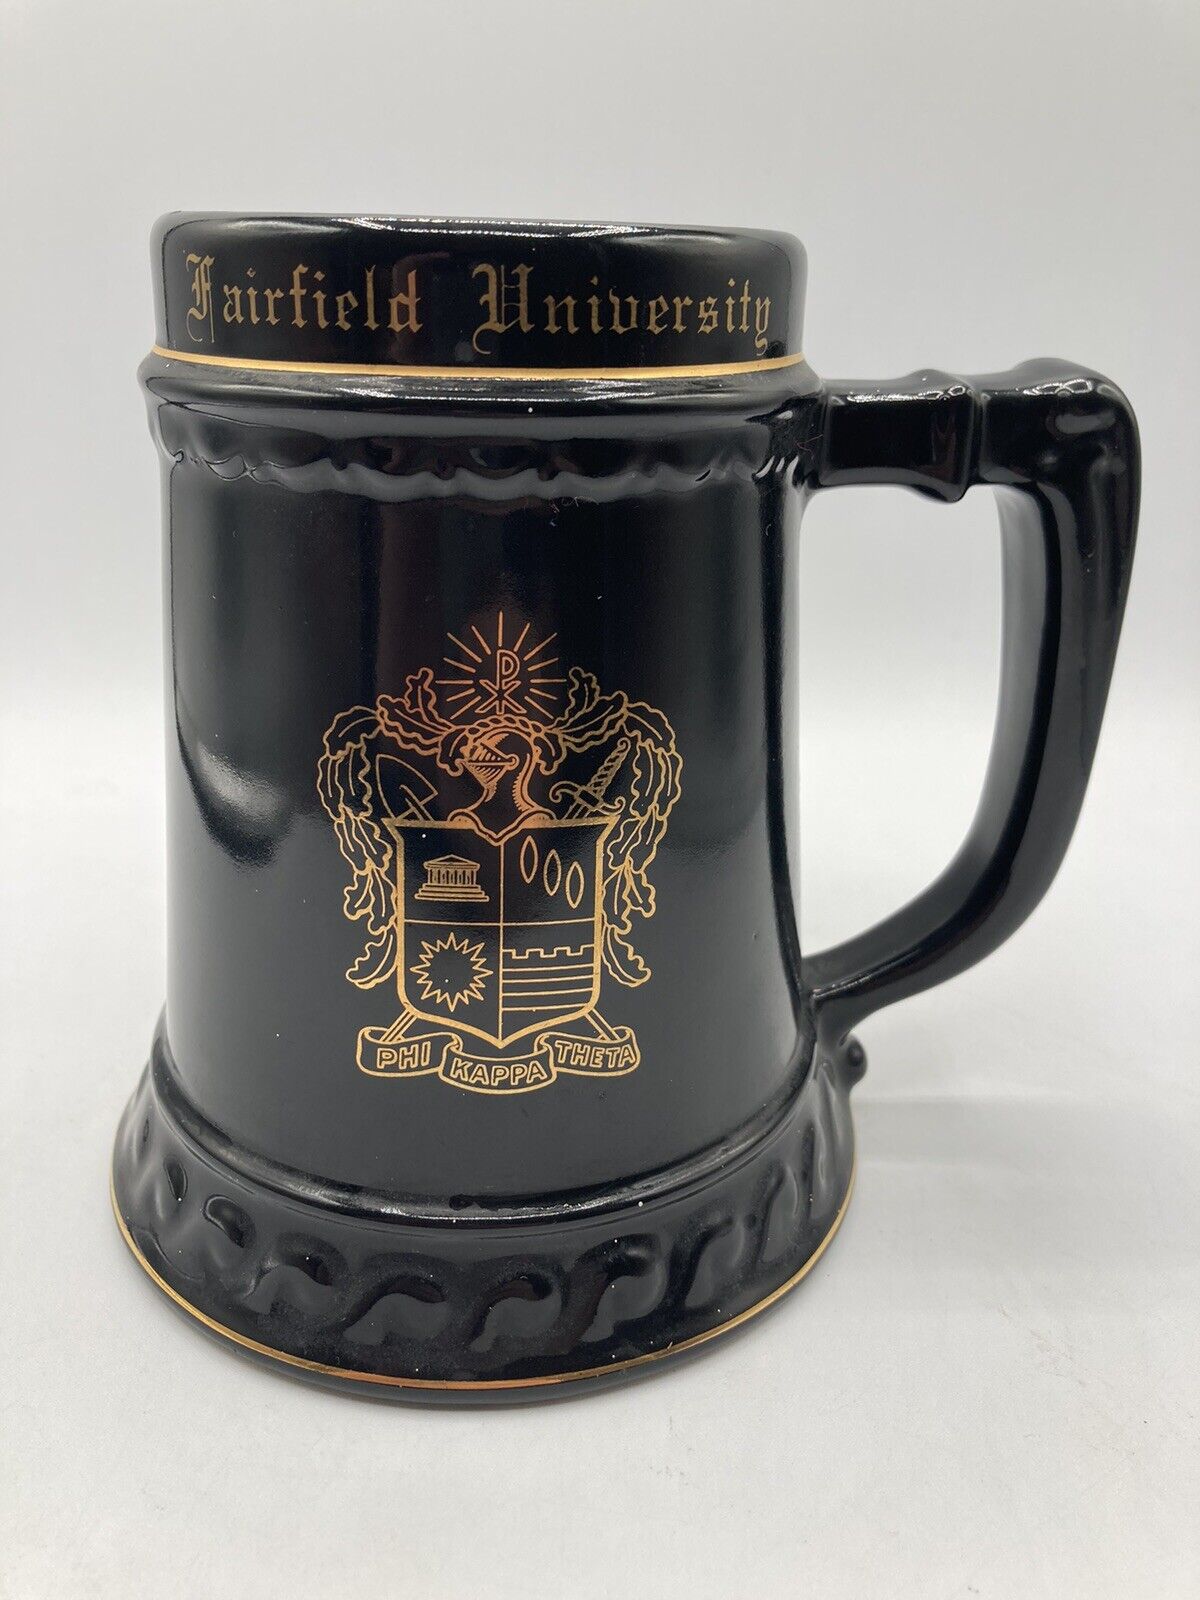 Fairfield University Beer Stein Mug Ceramic Black  - Gold Trim.